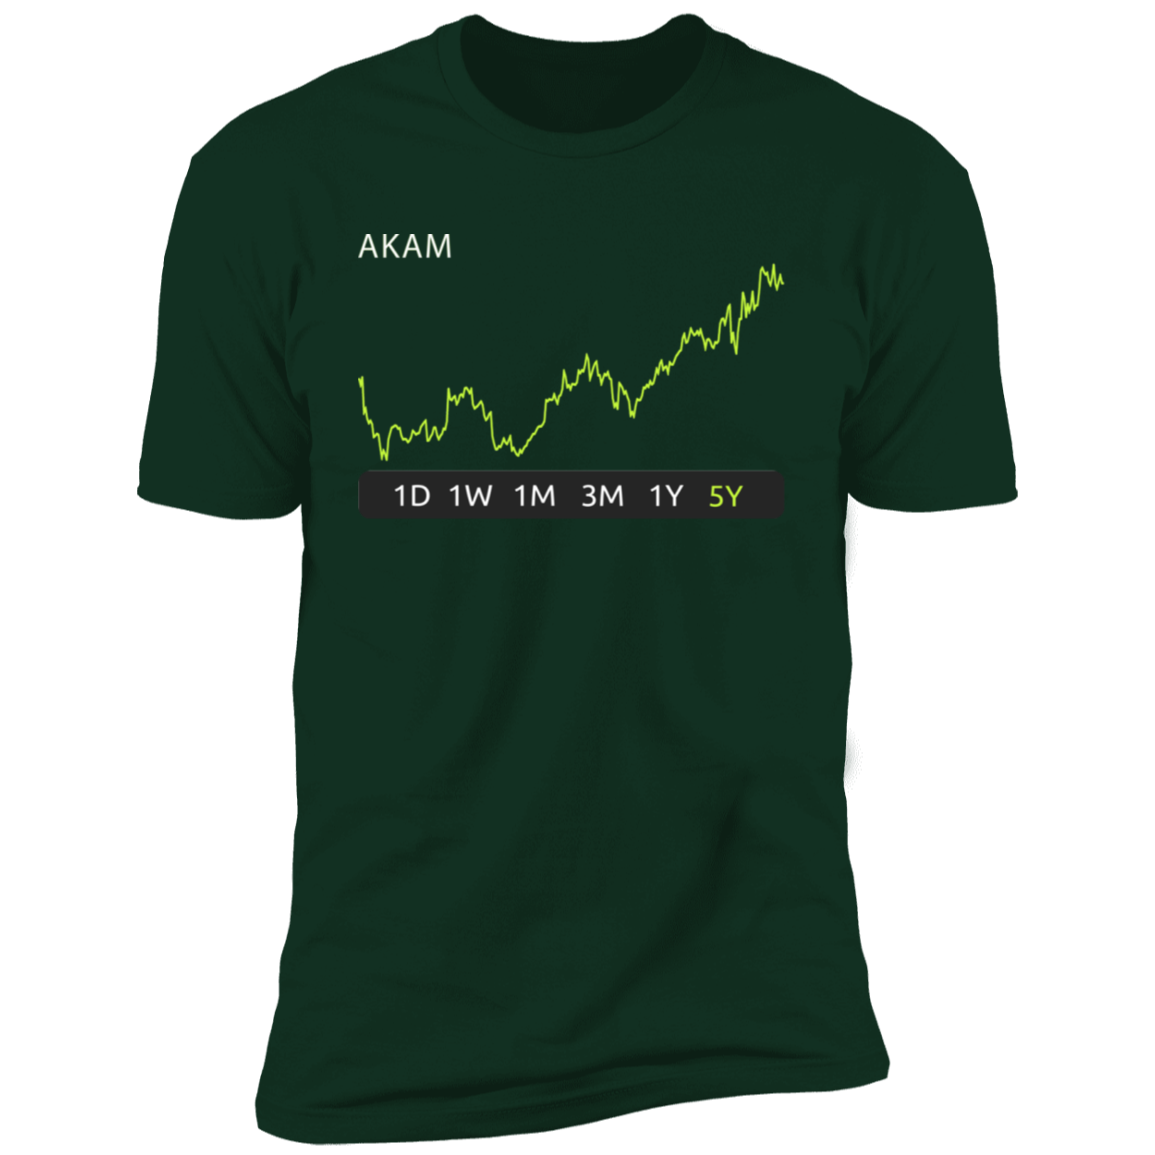 AKAM Stock 5y Premium T-Shirt